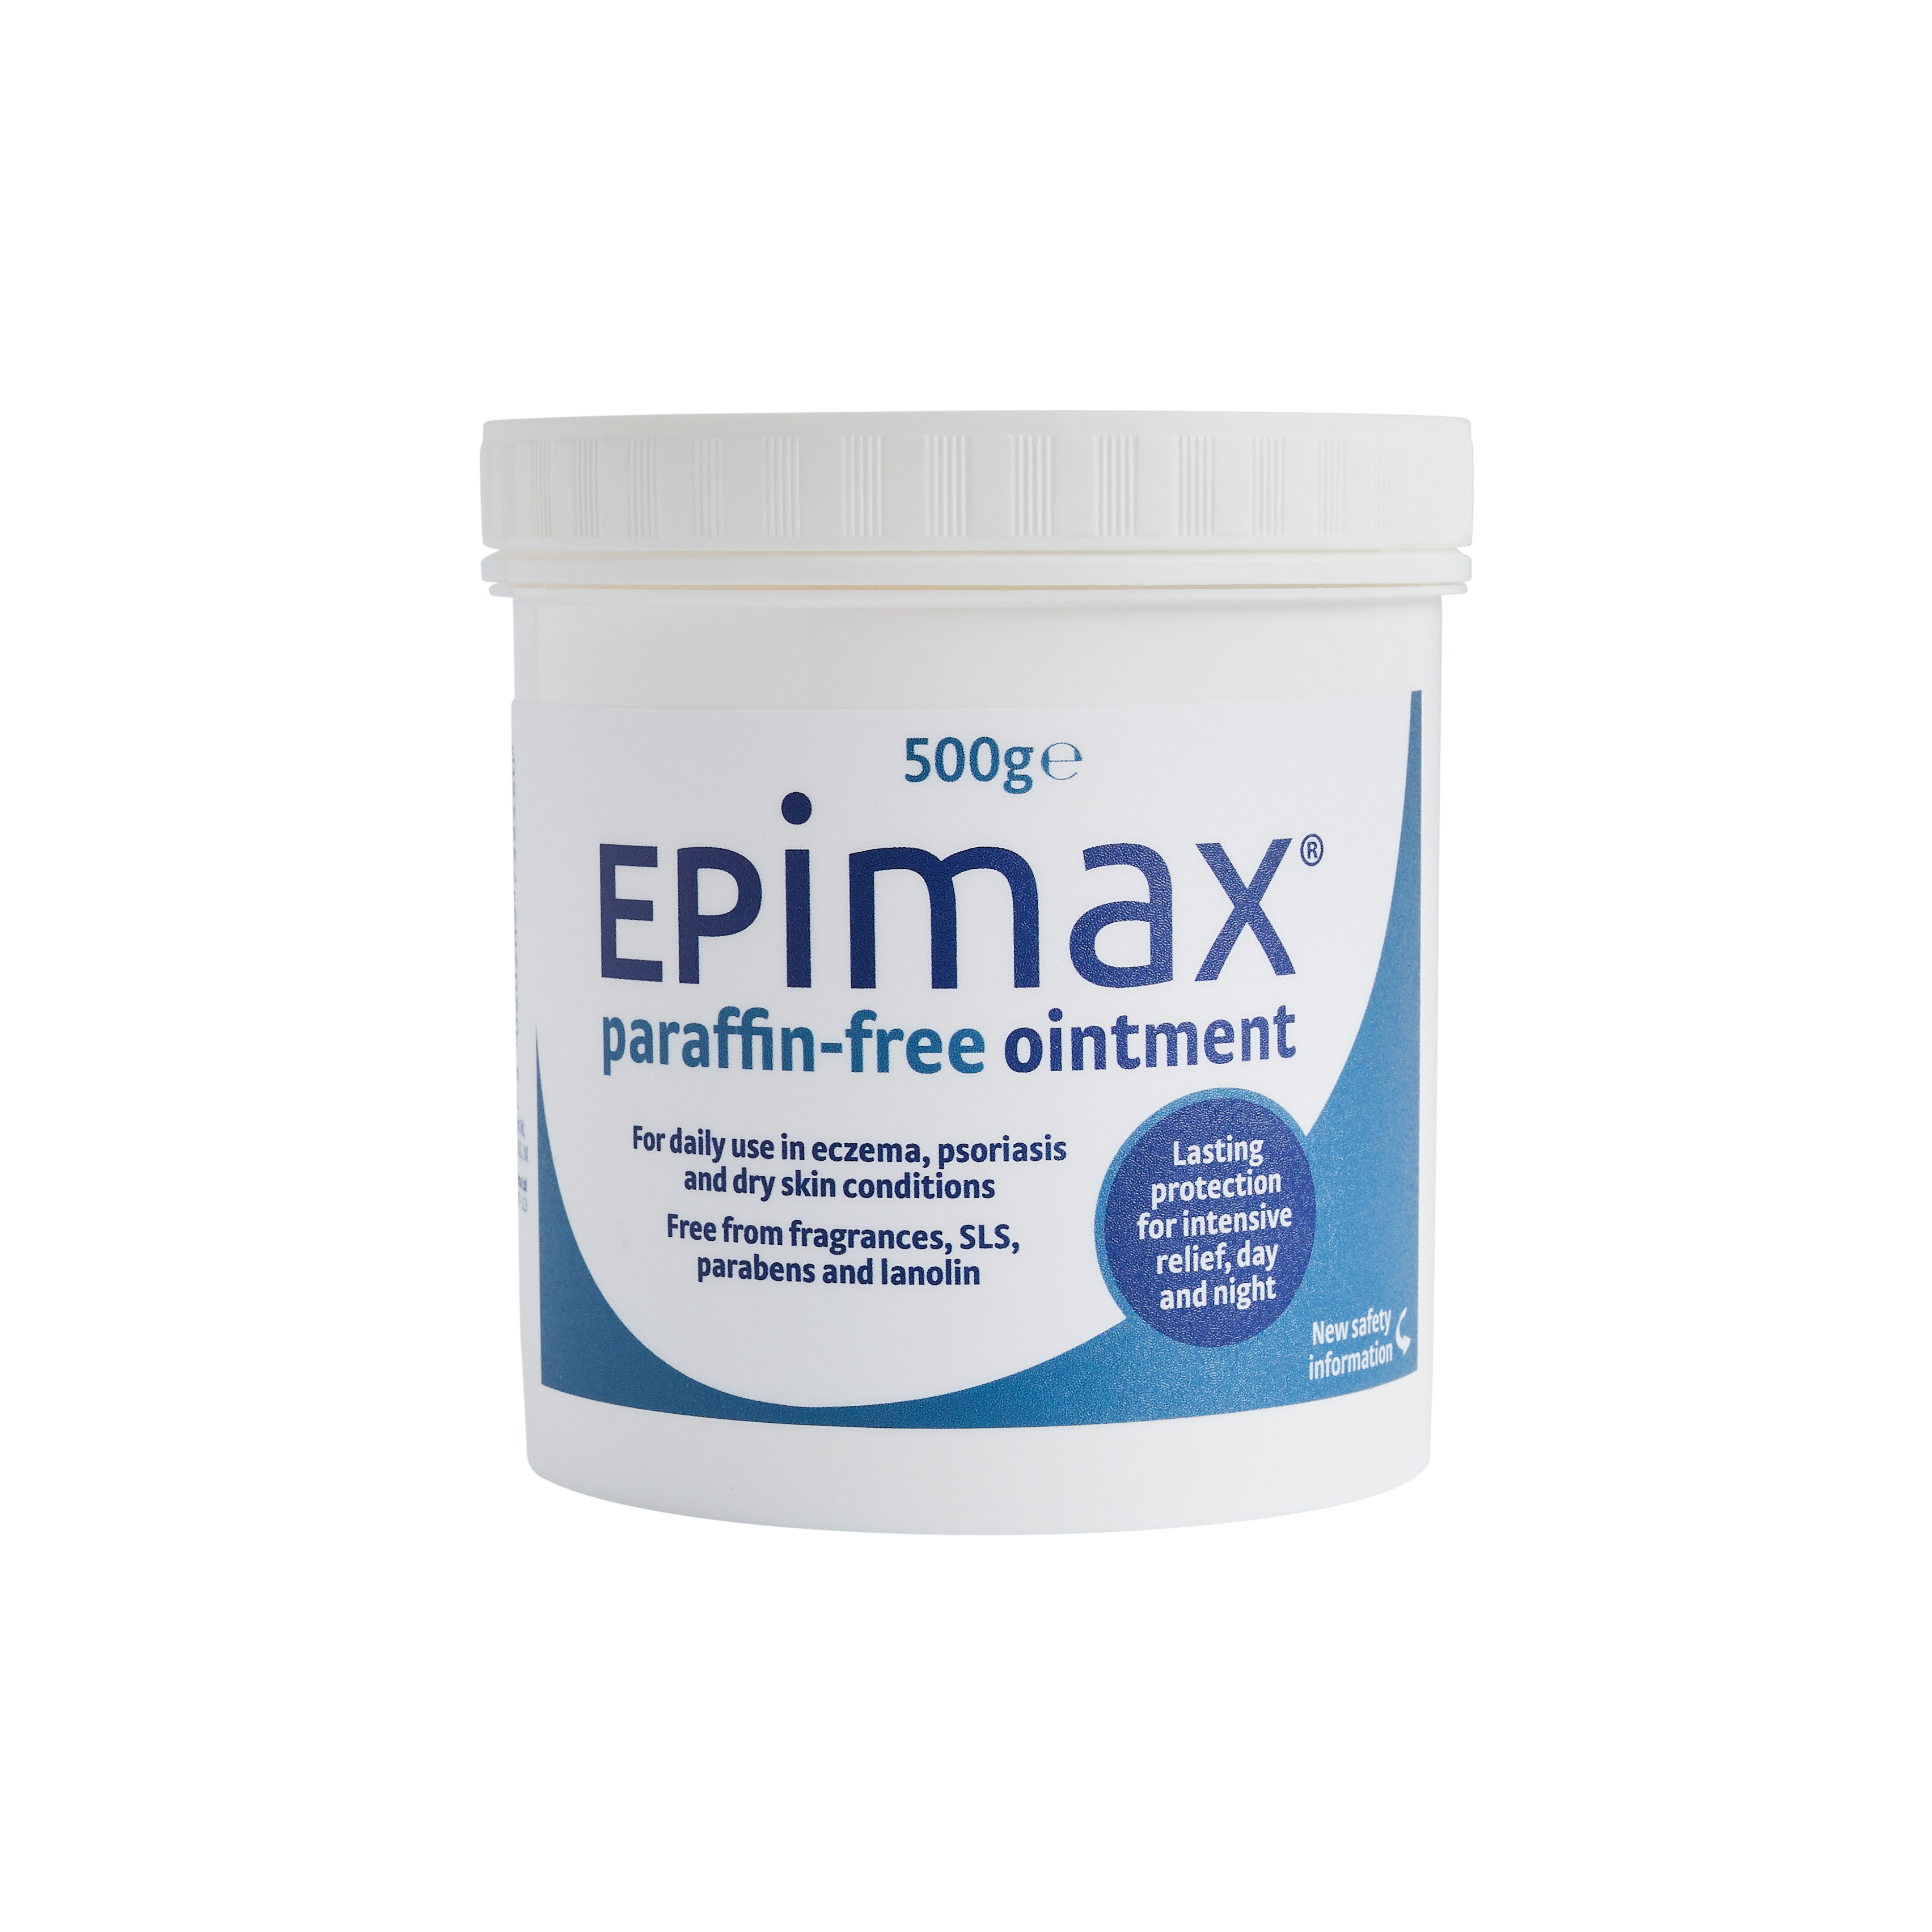 EPIMAX Paraffin-free Ointment